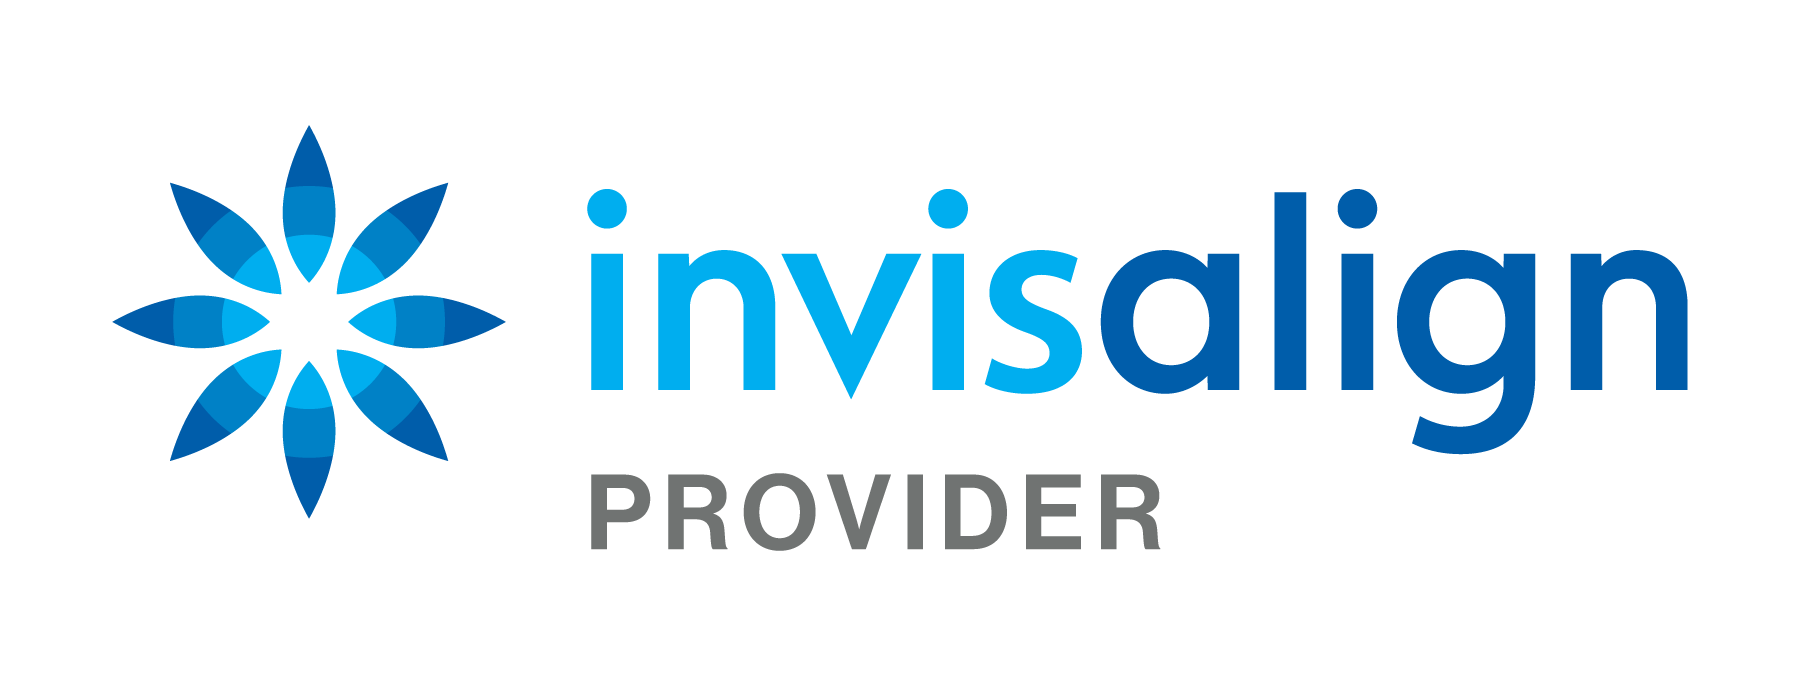 invisalign-provider-logo-blue-en-png